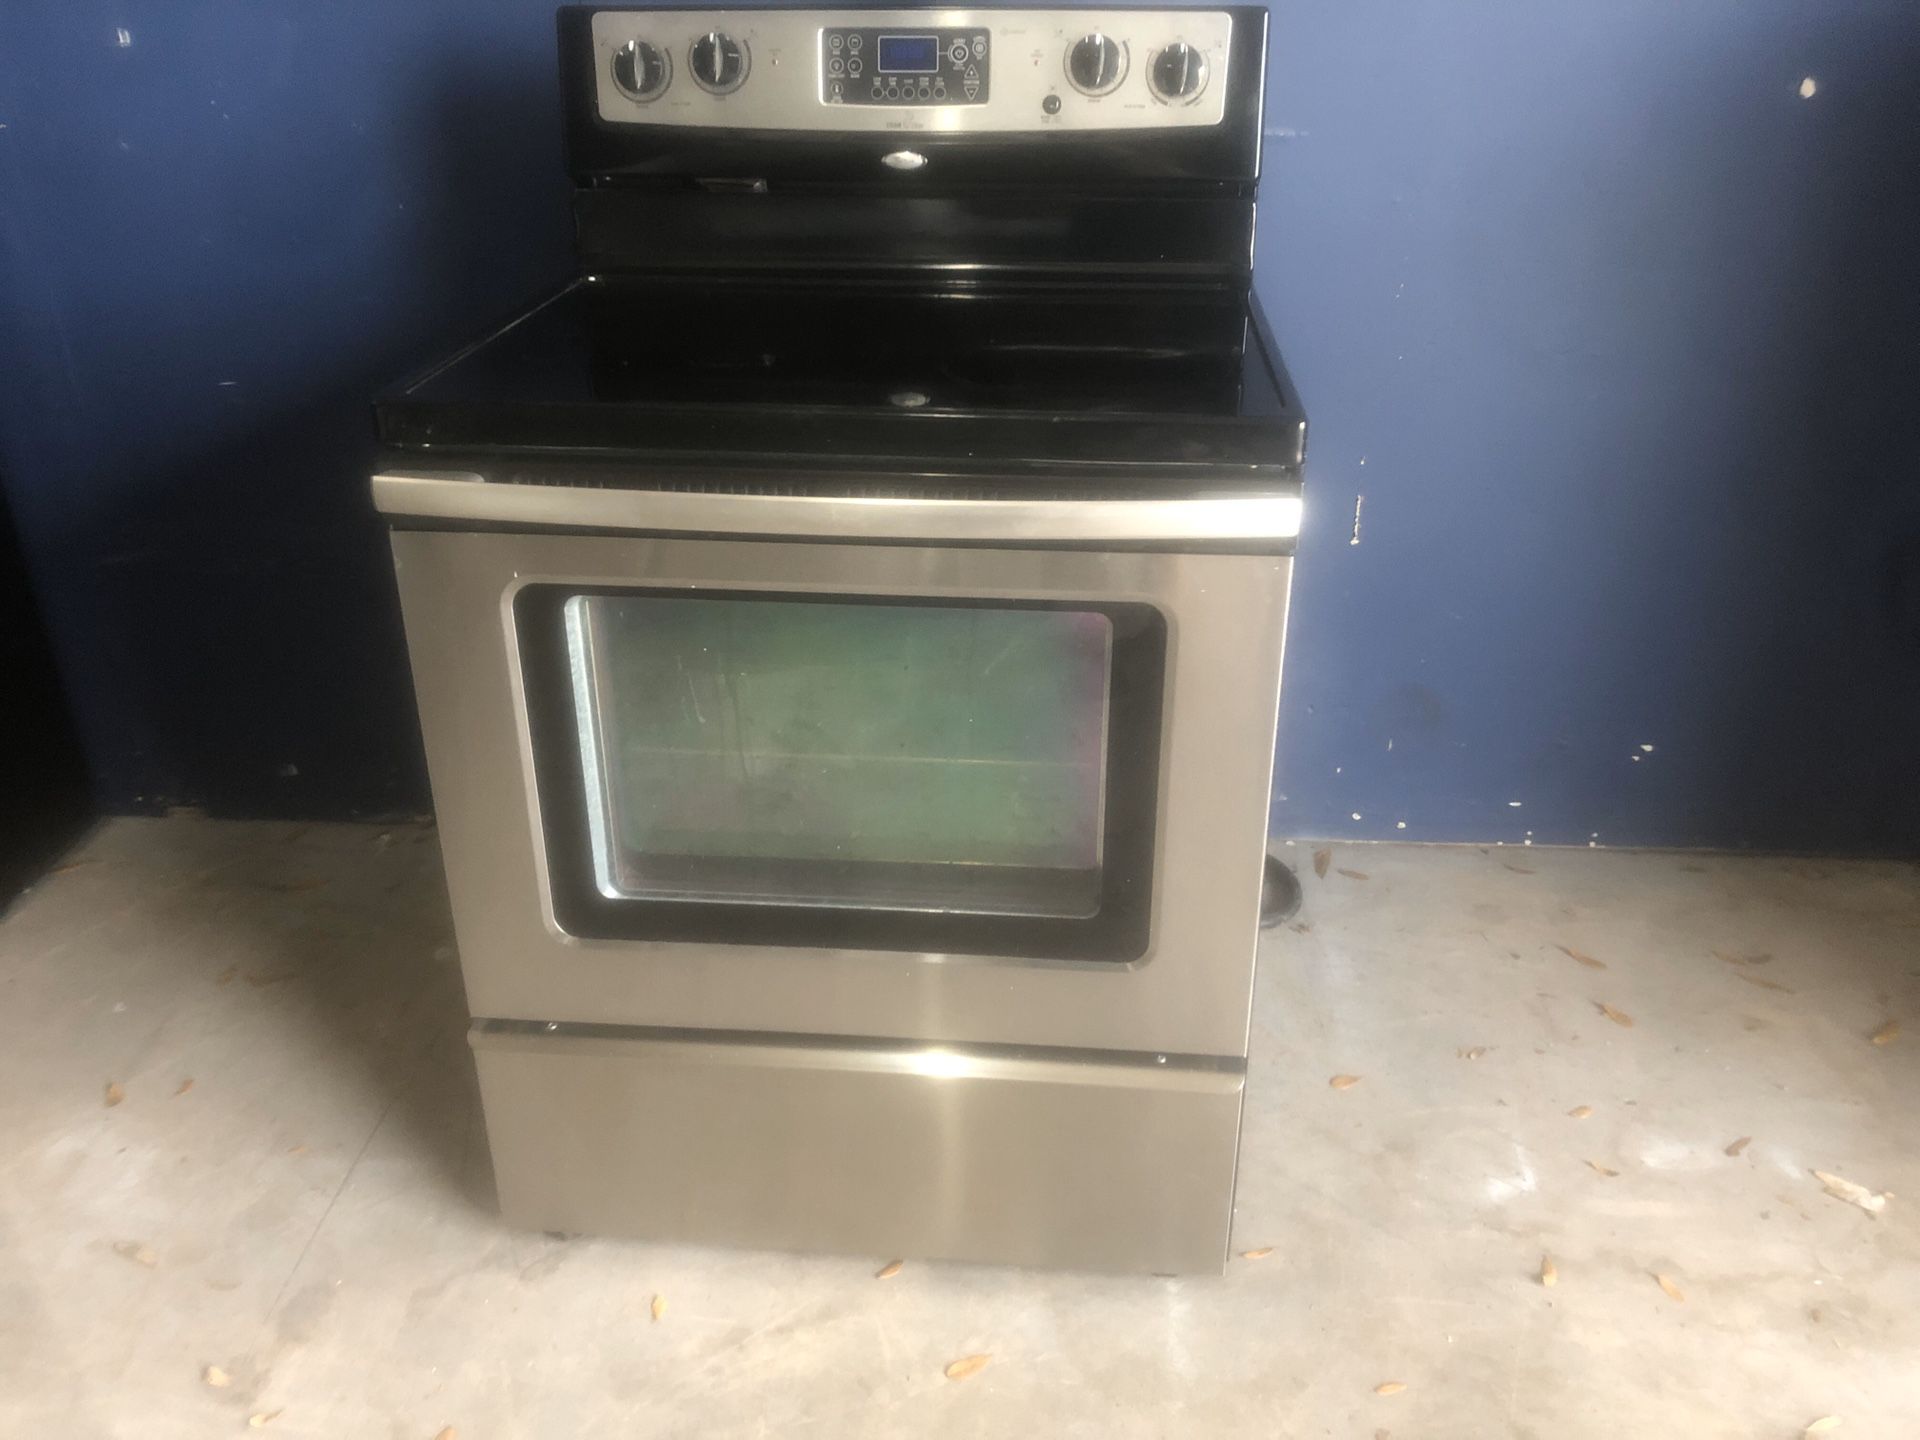 Stainless steel kitchen appliance set